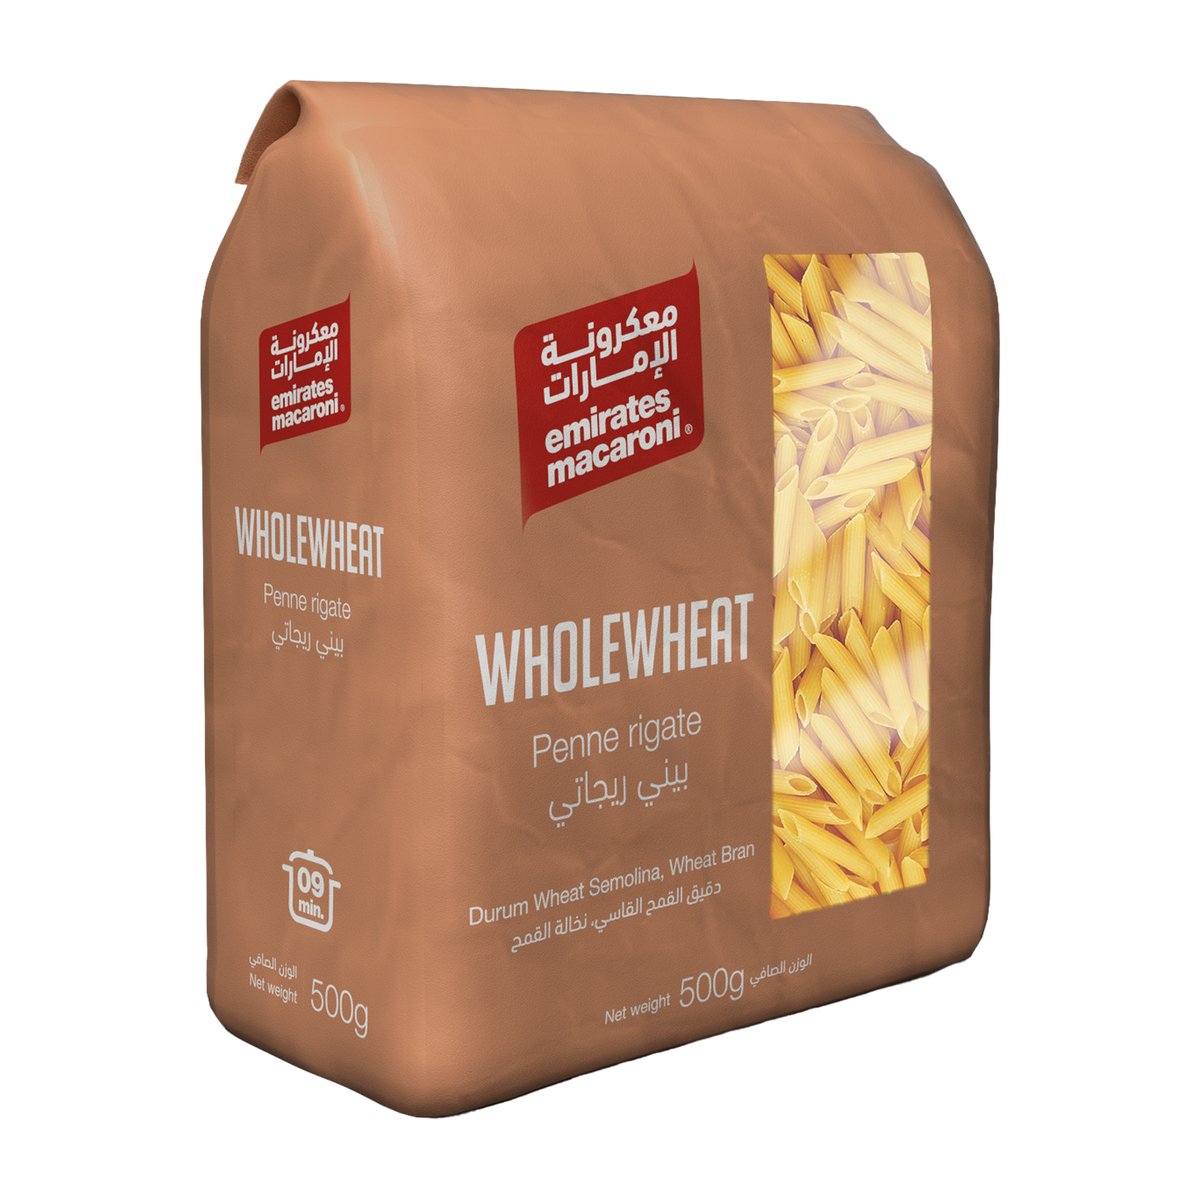 Emirates Macaroni Whole Wheat Penne Rigate Pasta  500 g